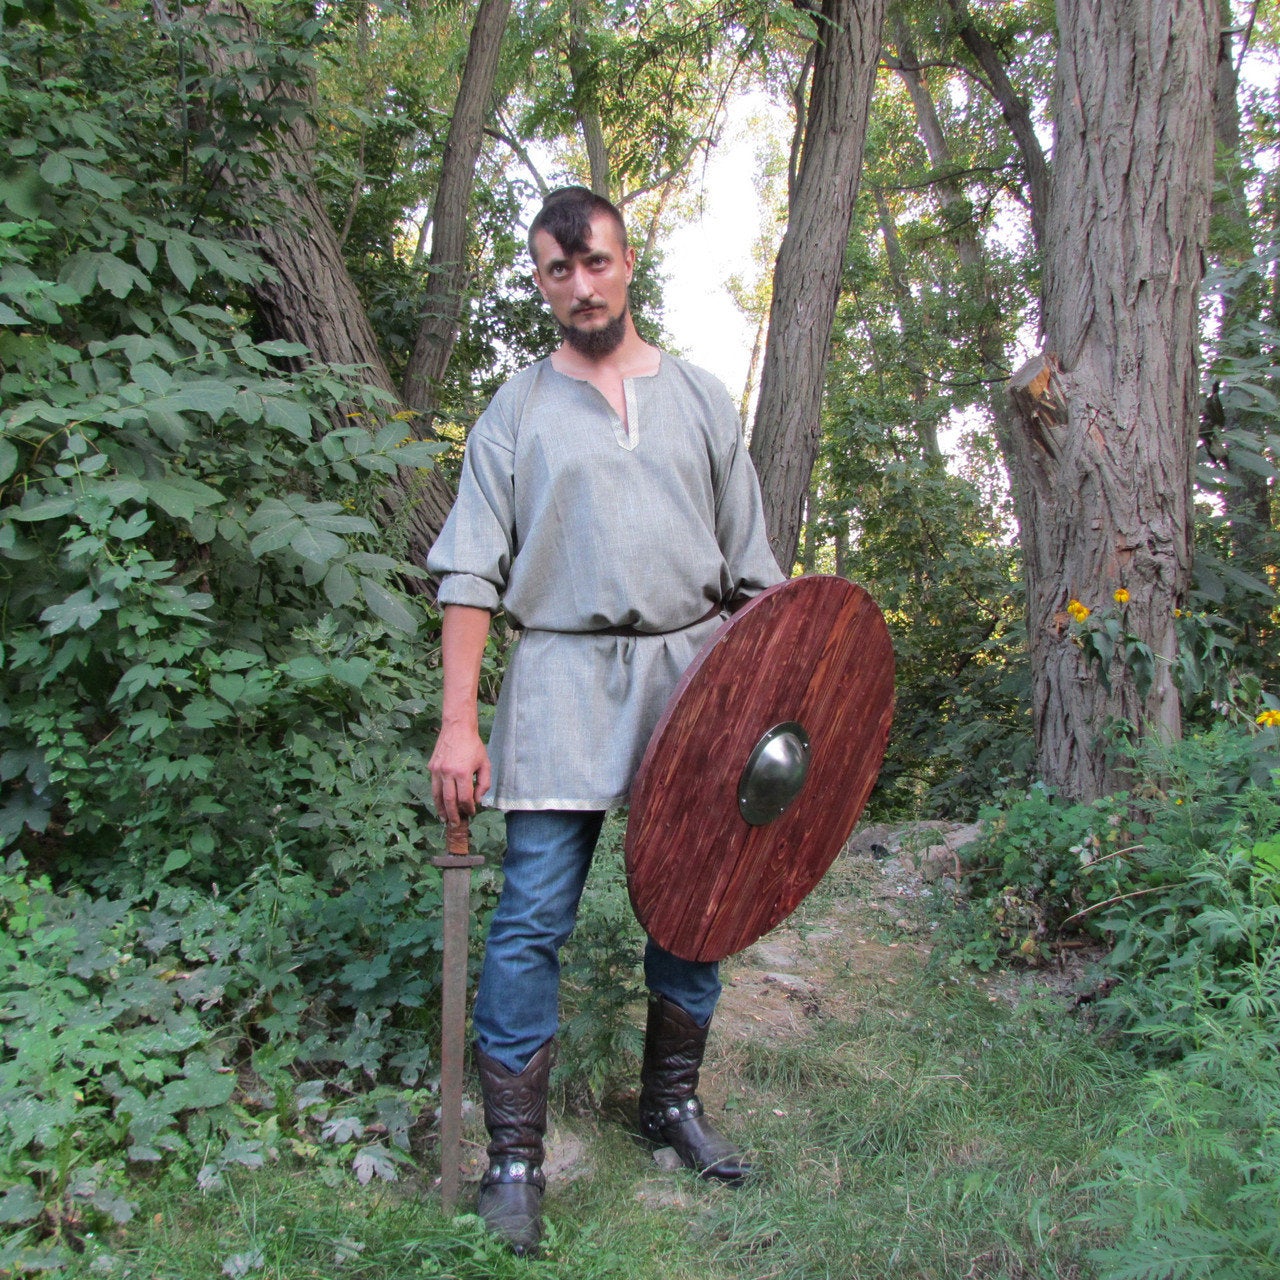 Viking shield, shield, runic shield, viking relic, viking artifact, sword, mace, hammer, axe, viking axe, viking gift, medieval shield